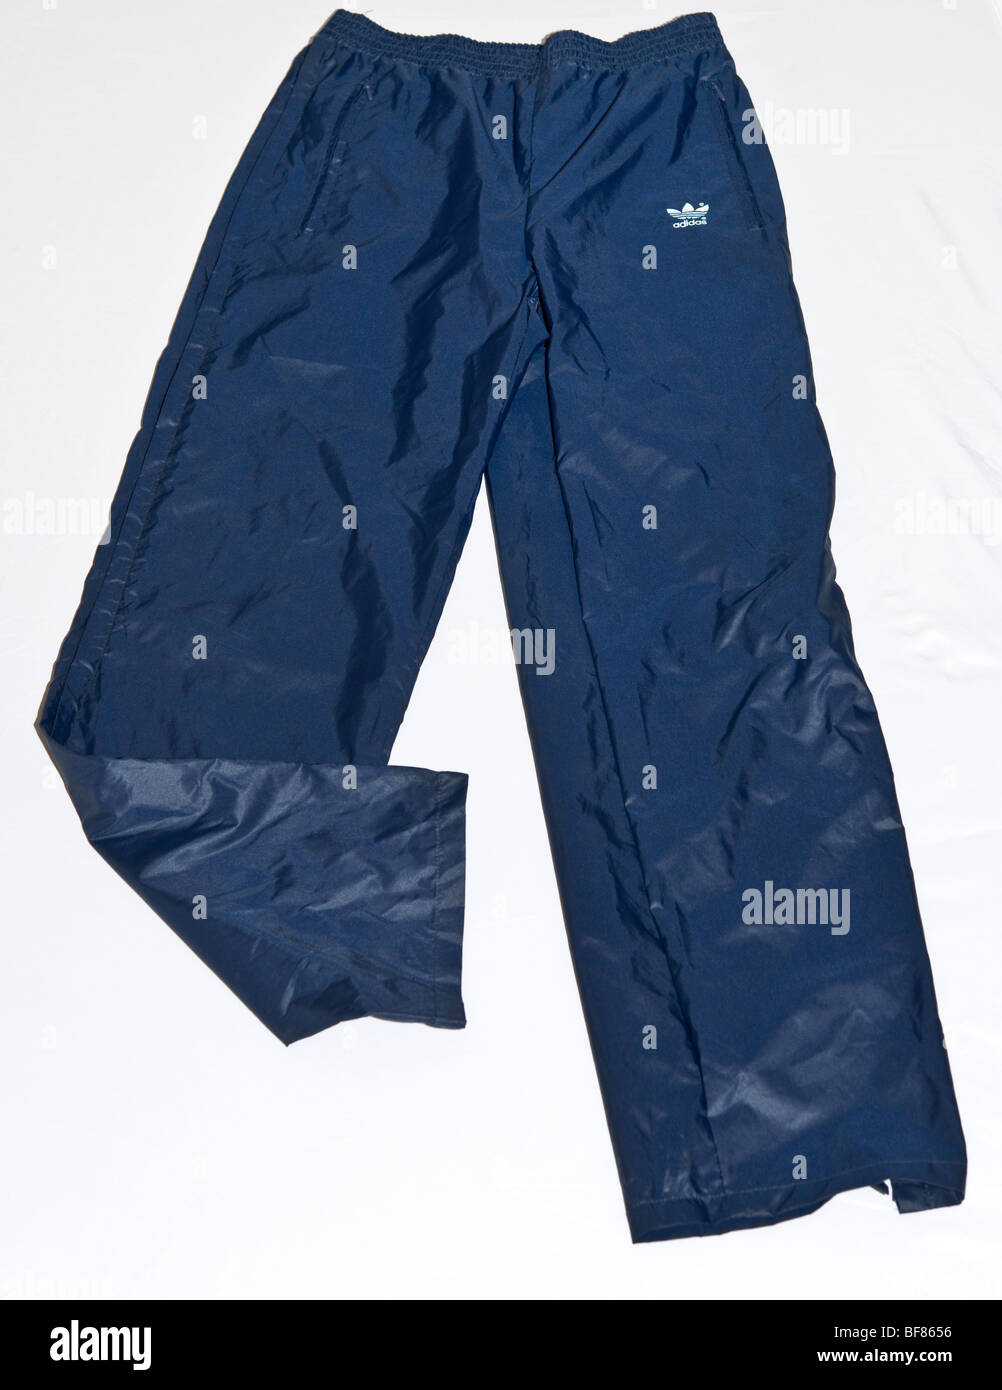 Adidas waterproof nylon tracskuit trousers bottoms. Adidas Trefoil logo.  Sportswear branded menswear clothing Stock Photo - Alamy